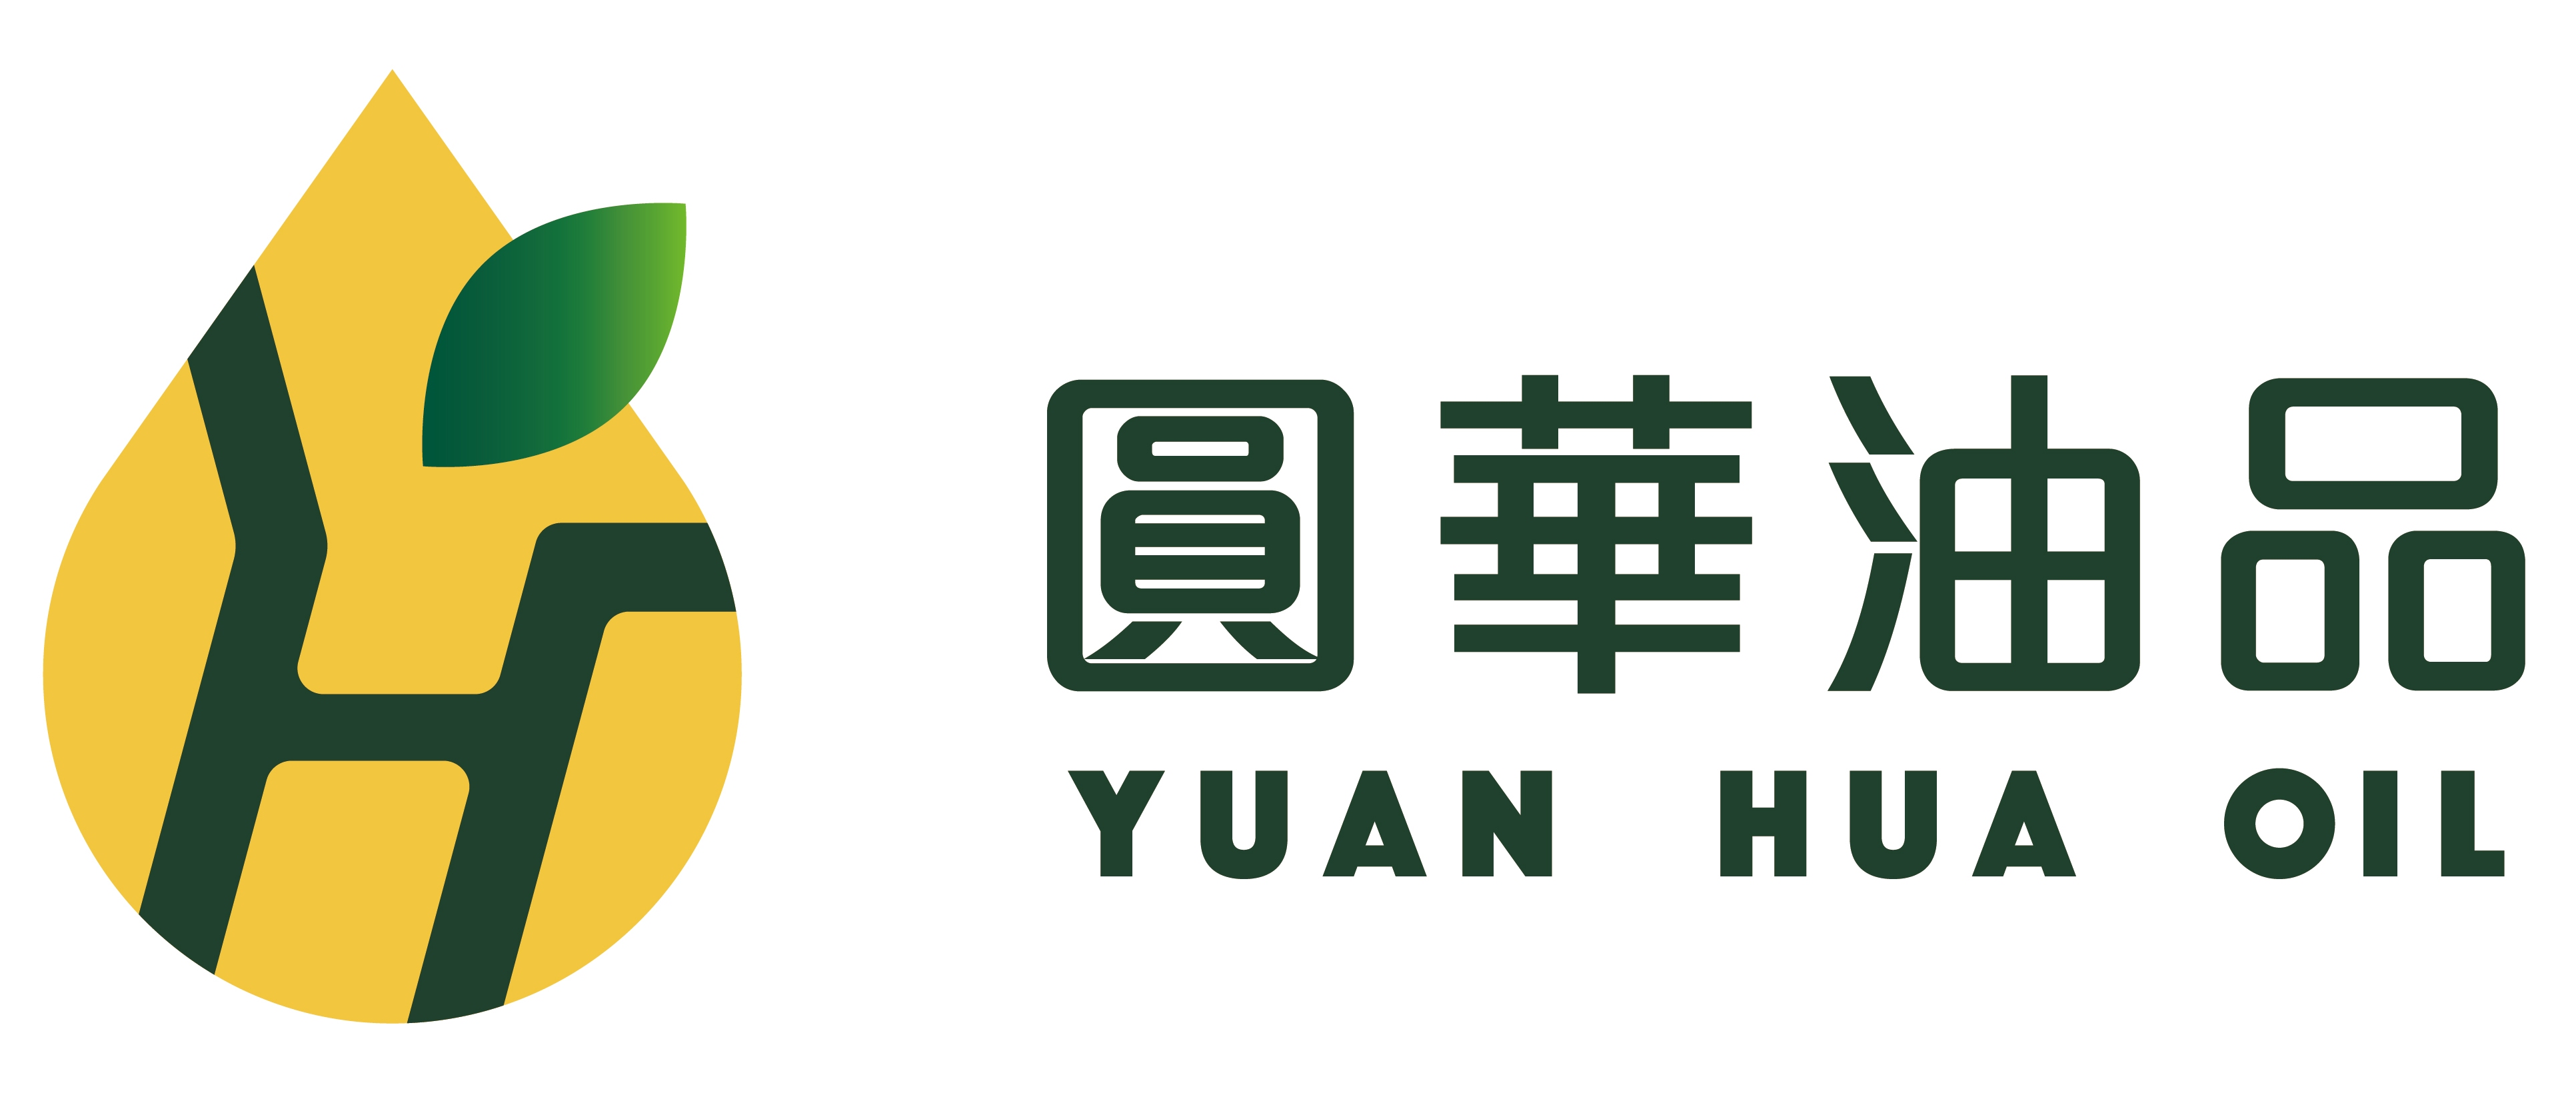 YUAN-HUA CHEMICAL CO., LTD.